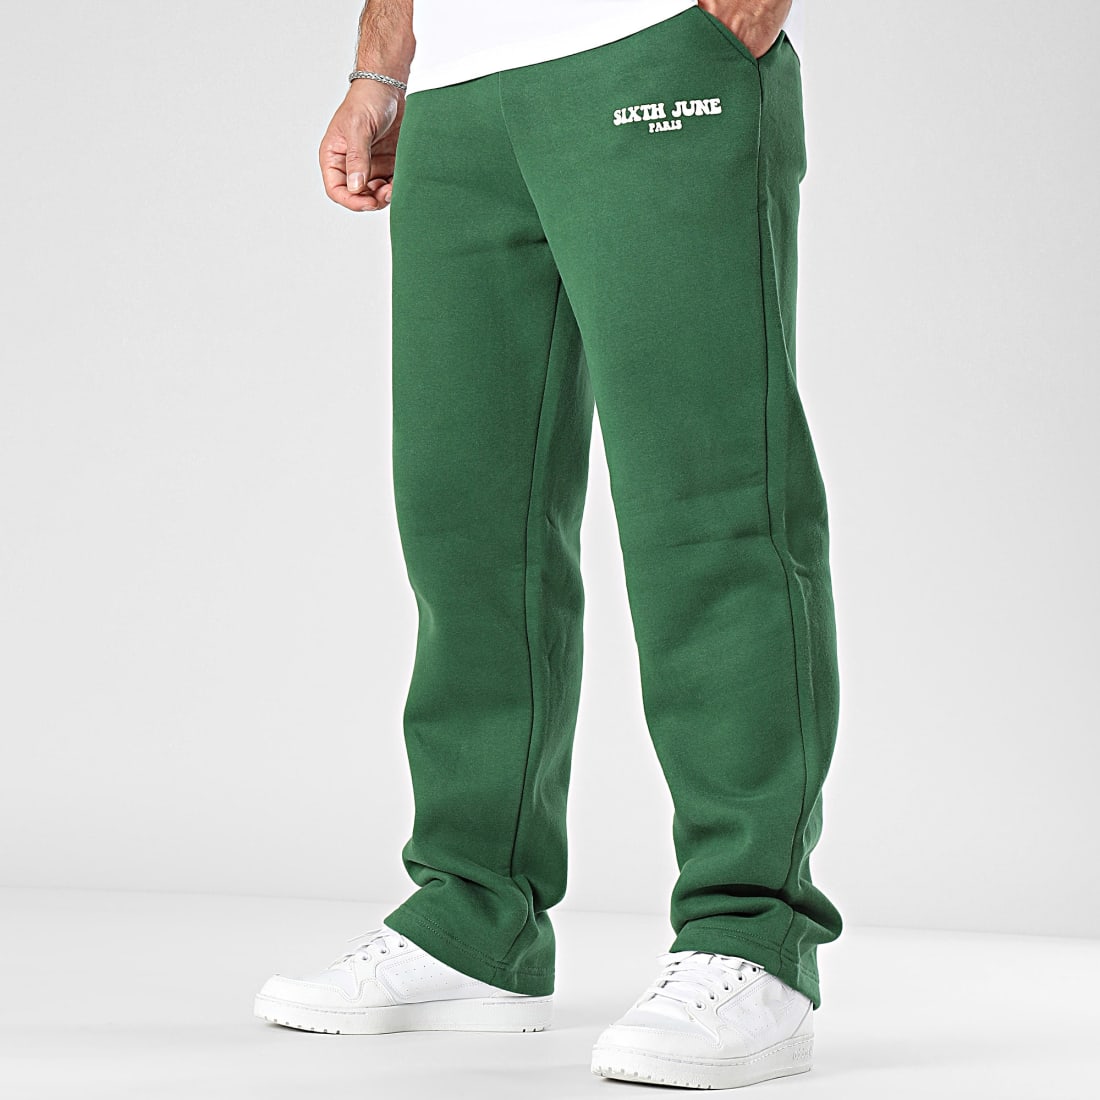 Next Pantalon de pluie - khaki green/vert - ZALANDO.CH